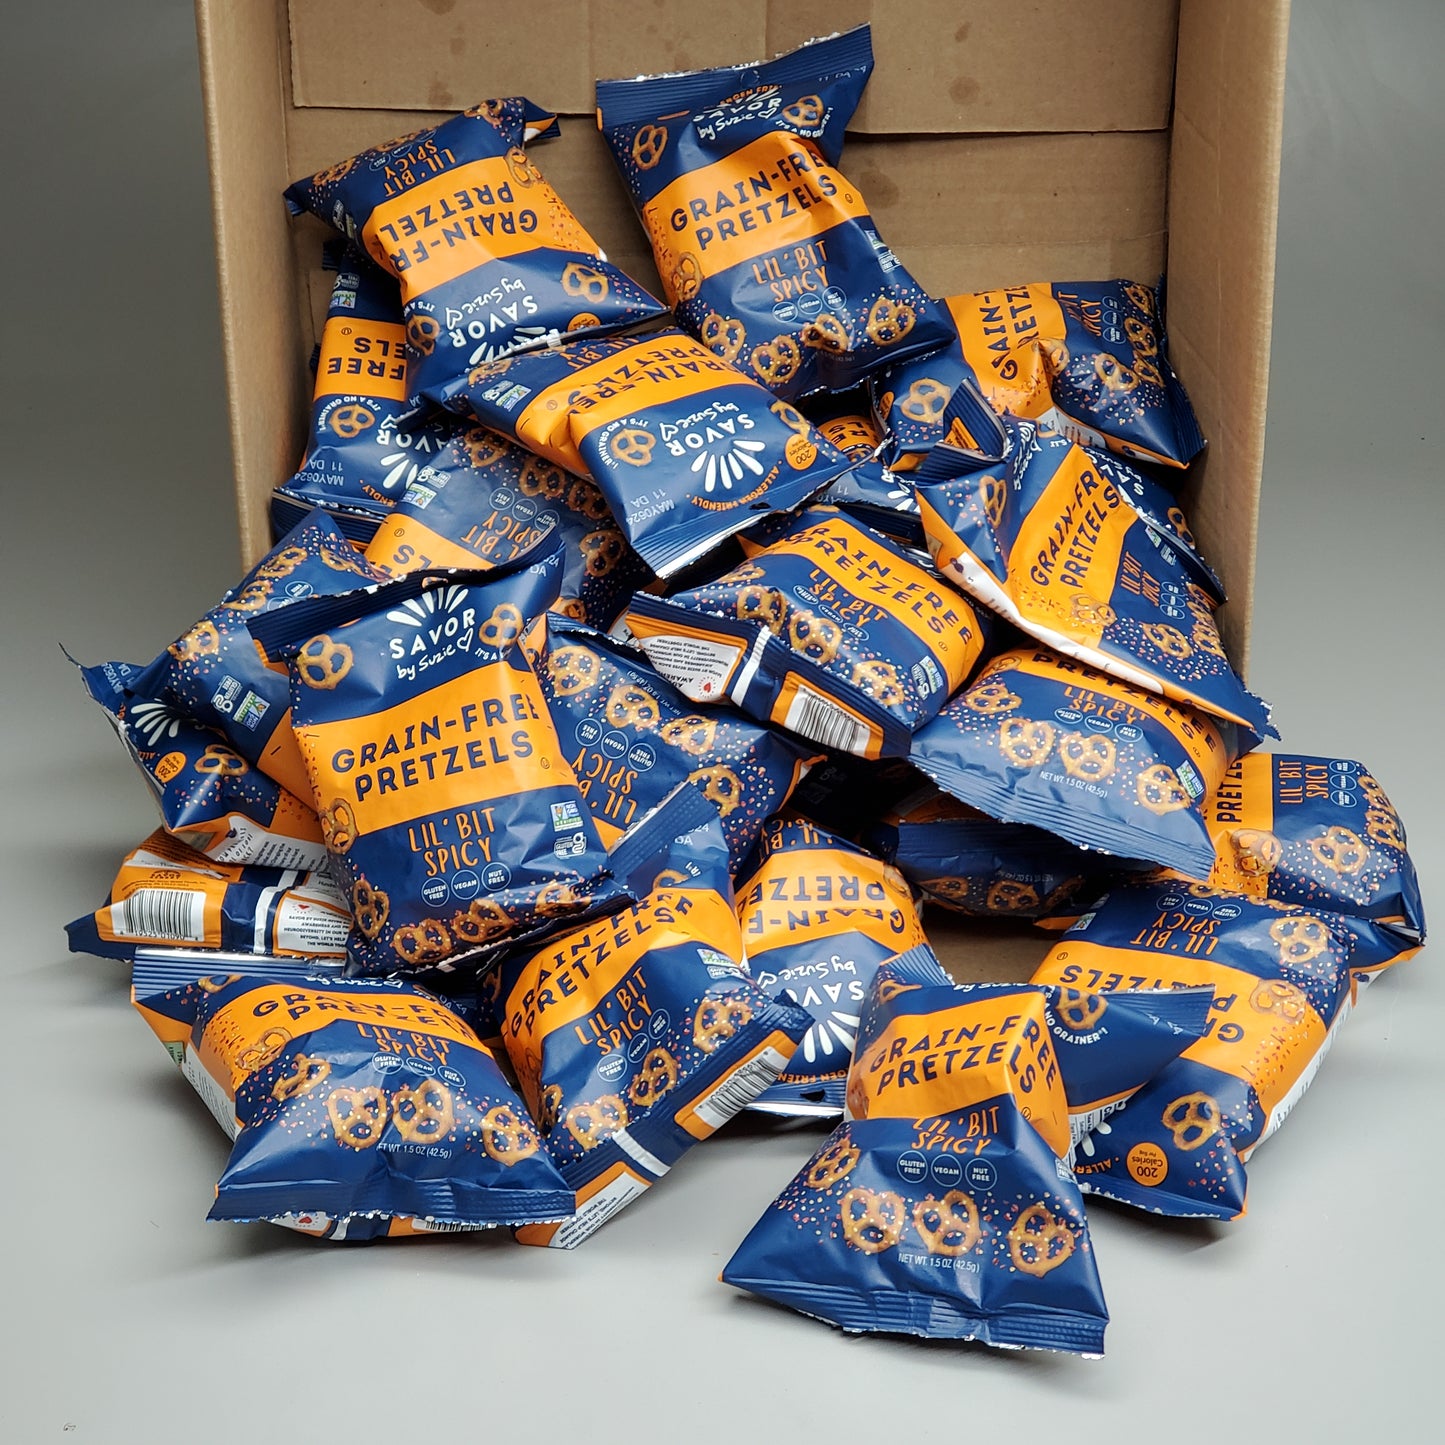 SAVOR STREET FOODS INC 36 Pack of Grain-Free Pretzels Lil' Bit Spicy 1.5 oz (5/24)